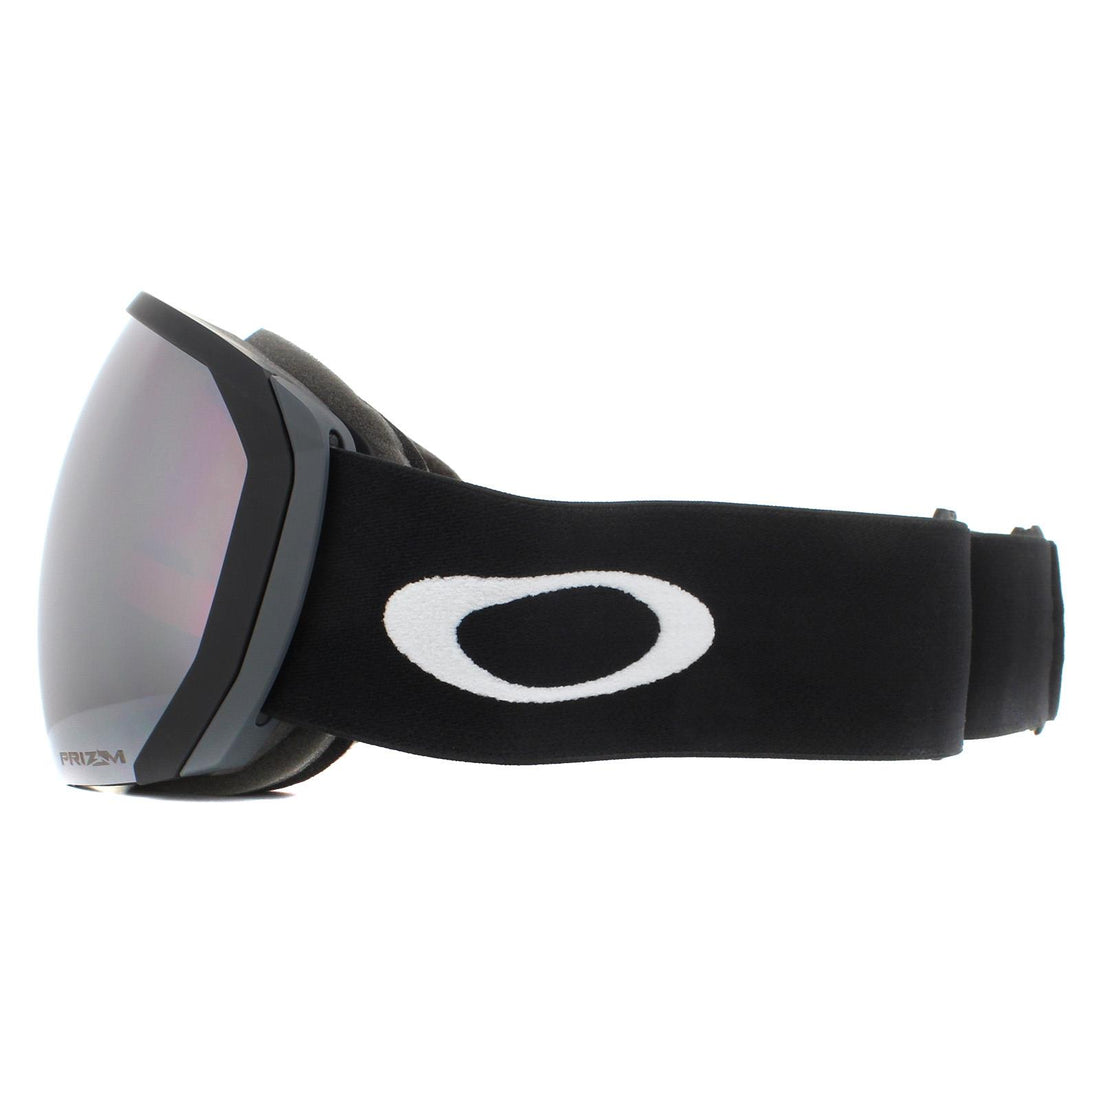 Oakley Ski Goggles Flight Path XL OO7110-01 Matte Black Prizm Snow Black Iridium